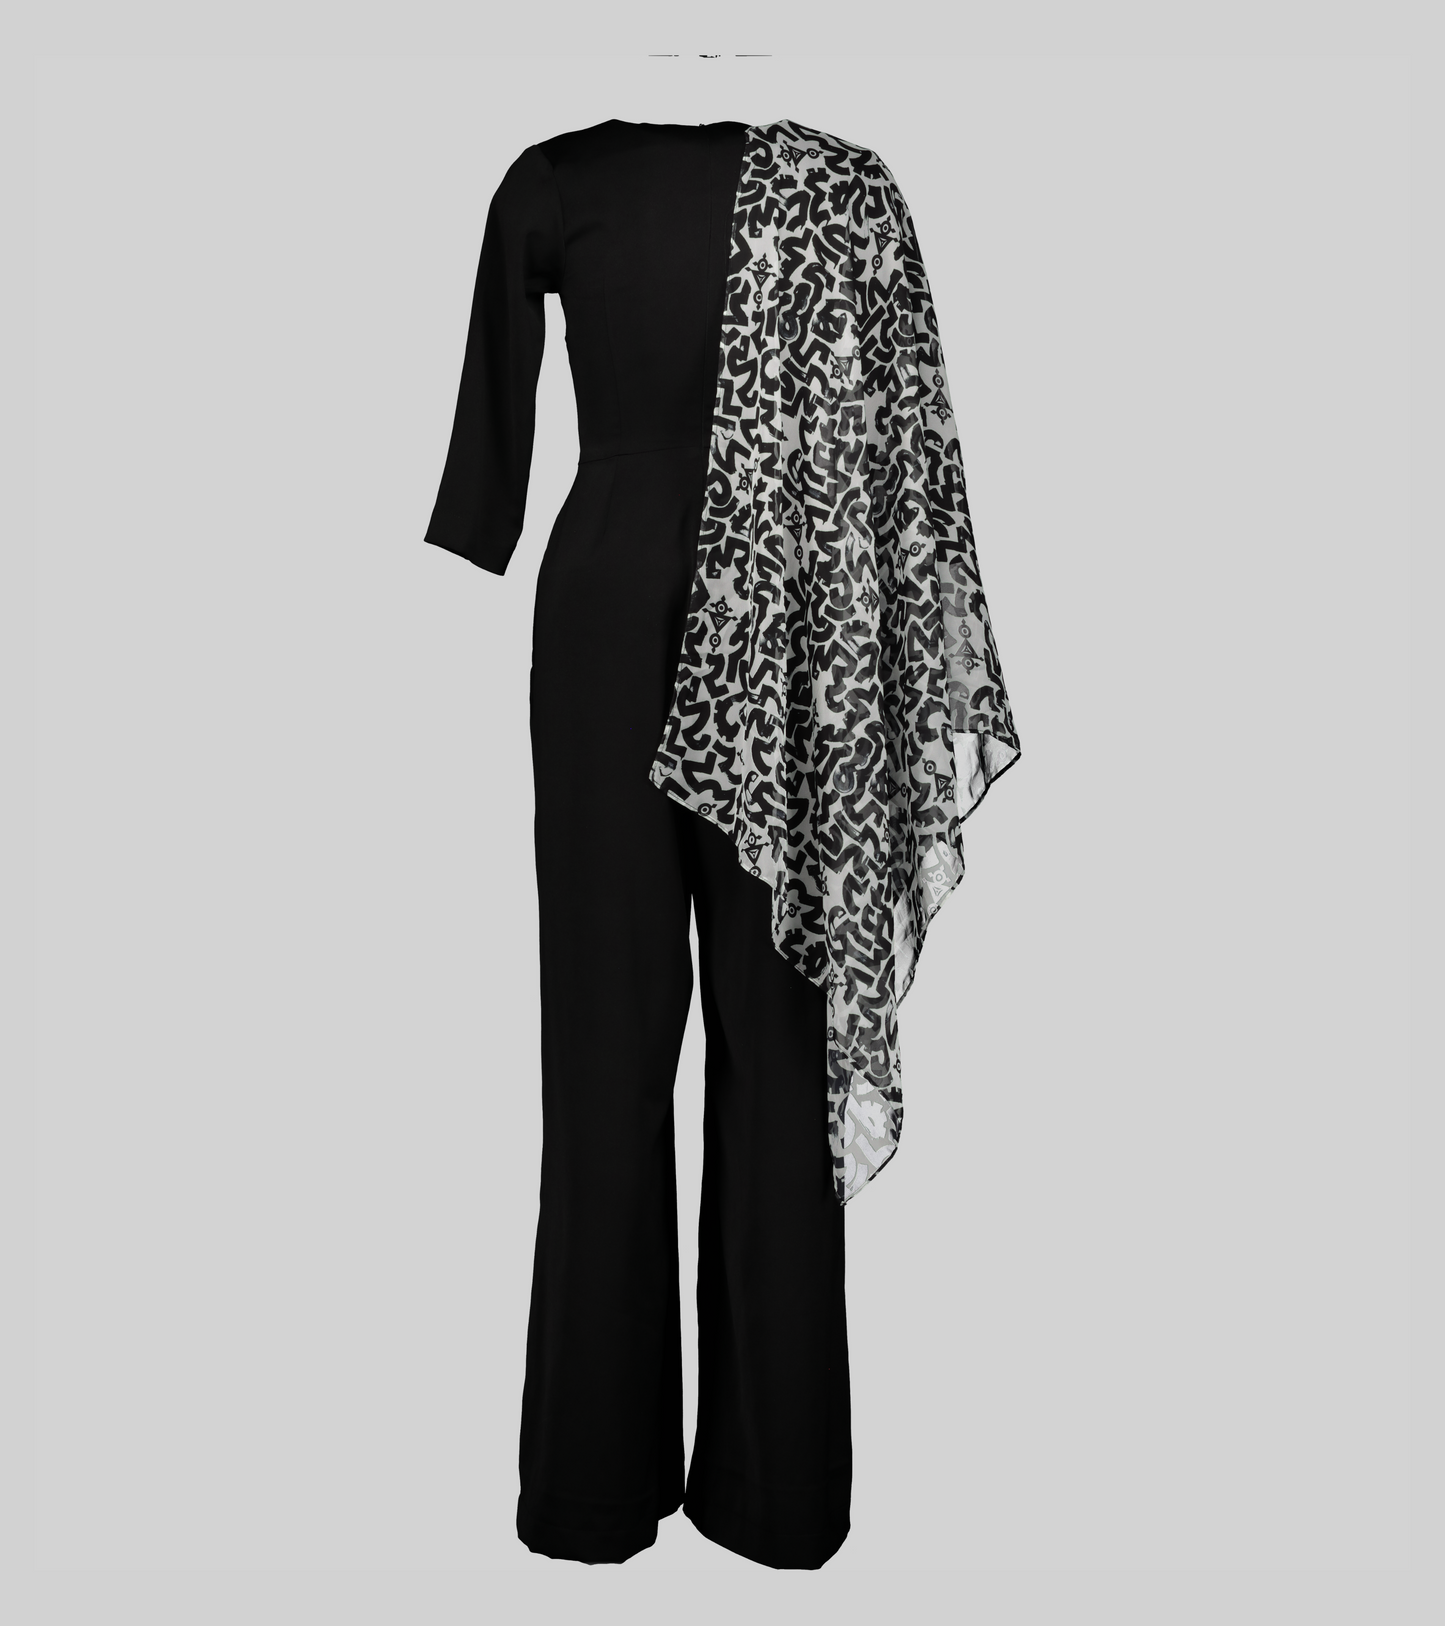 Alia Bare Monochrome Scarf Jumpsuit Large Black & White